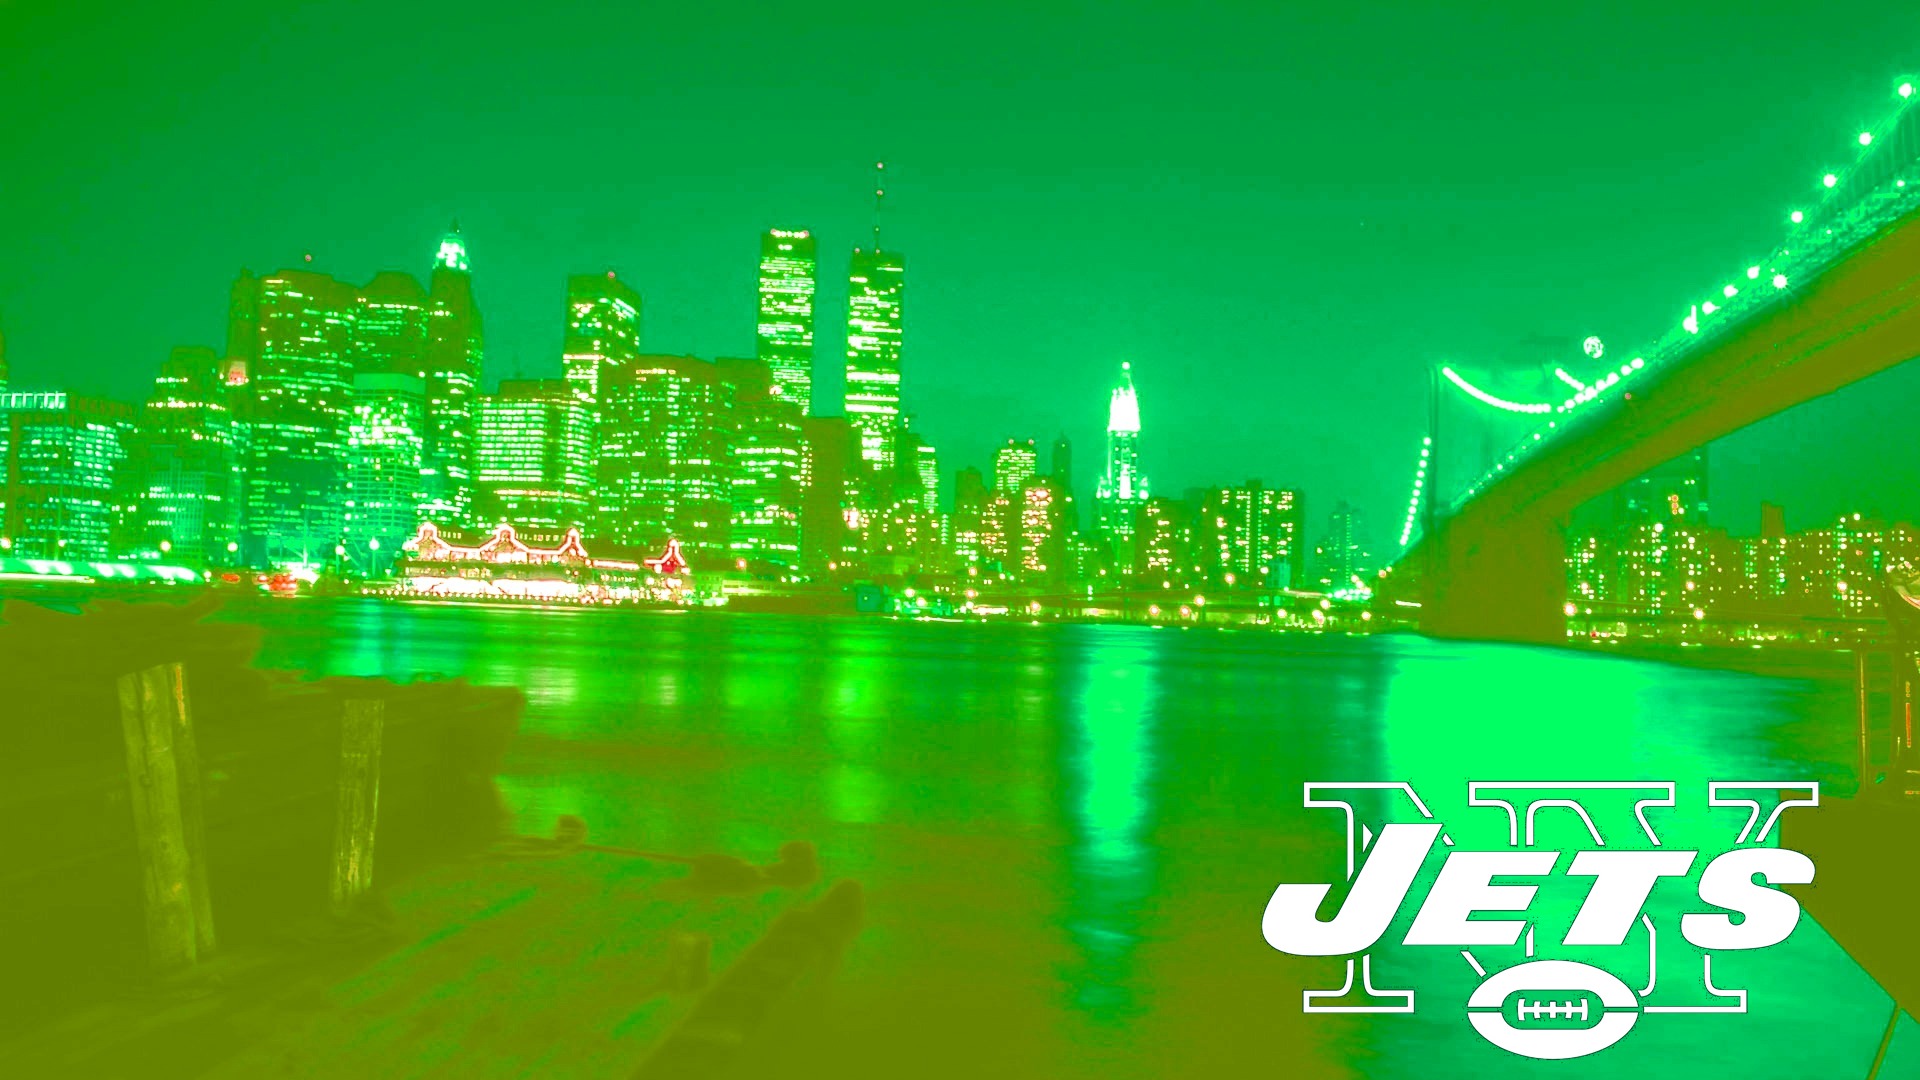 New York Jets On Ny Skyline Jpg